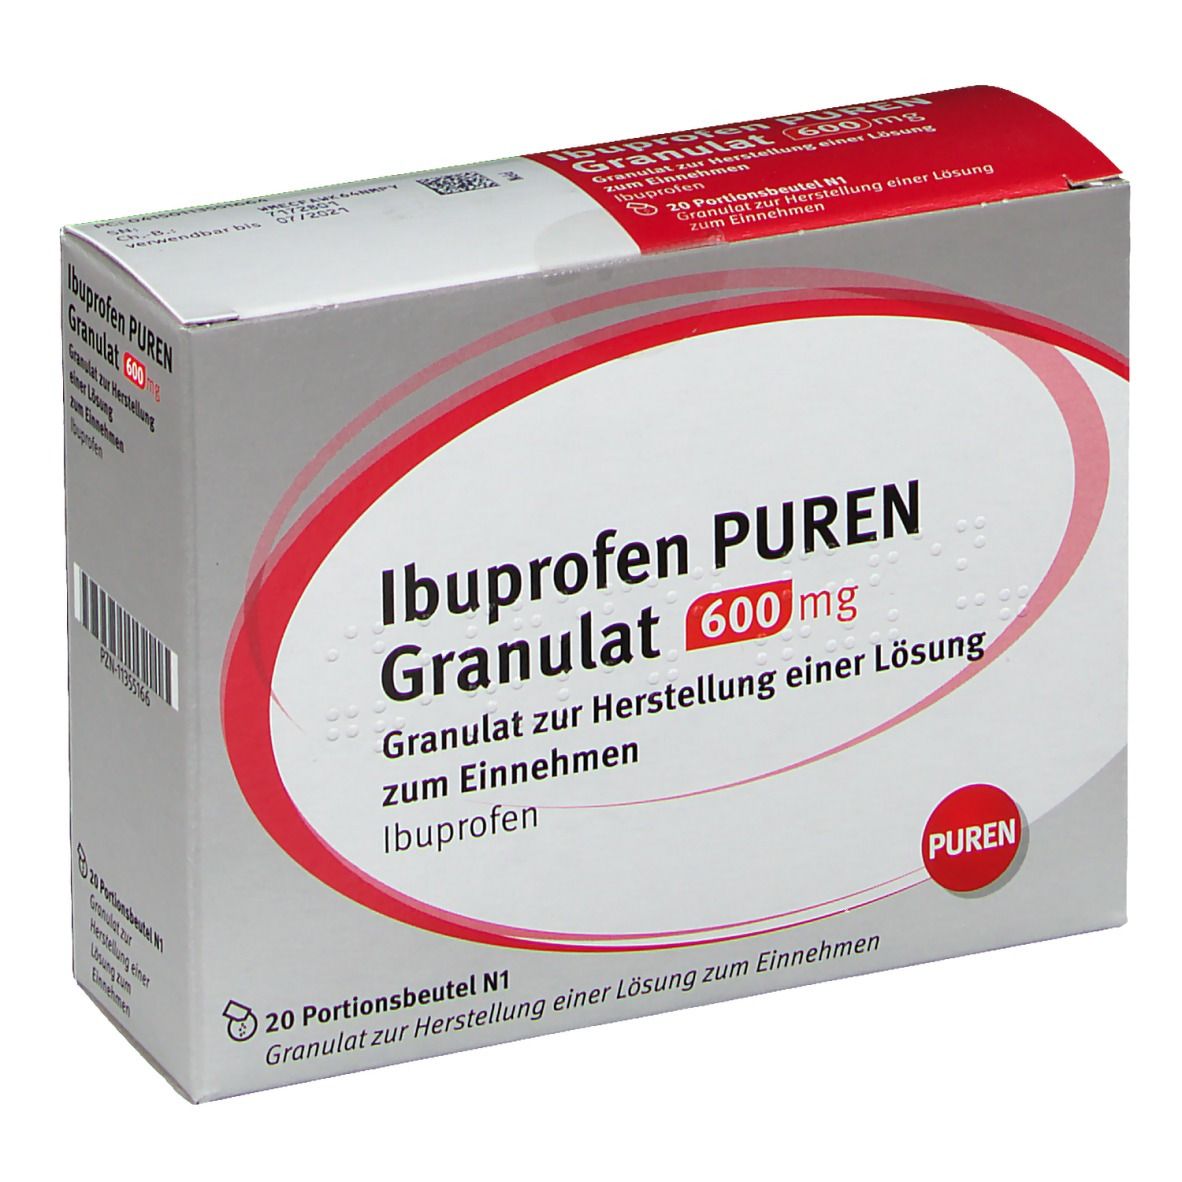 Ibuprofen PUREN Granulat 600 mg